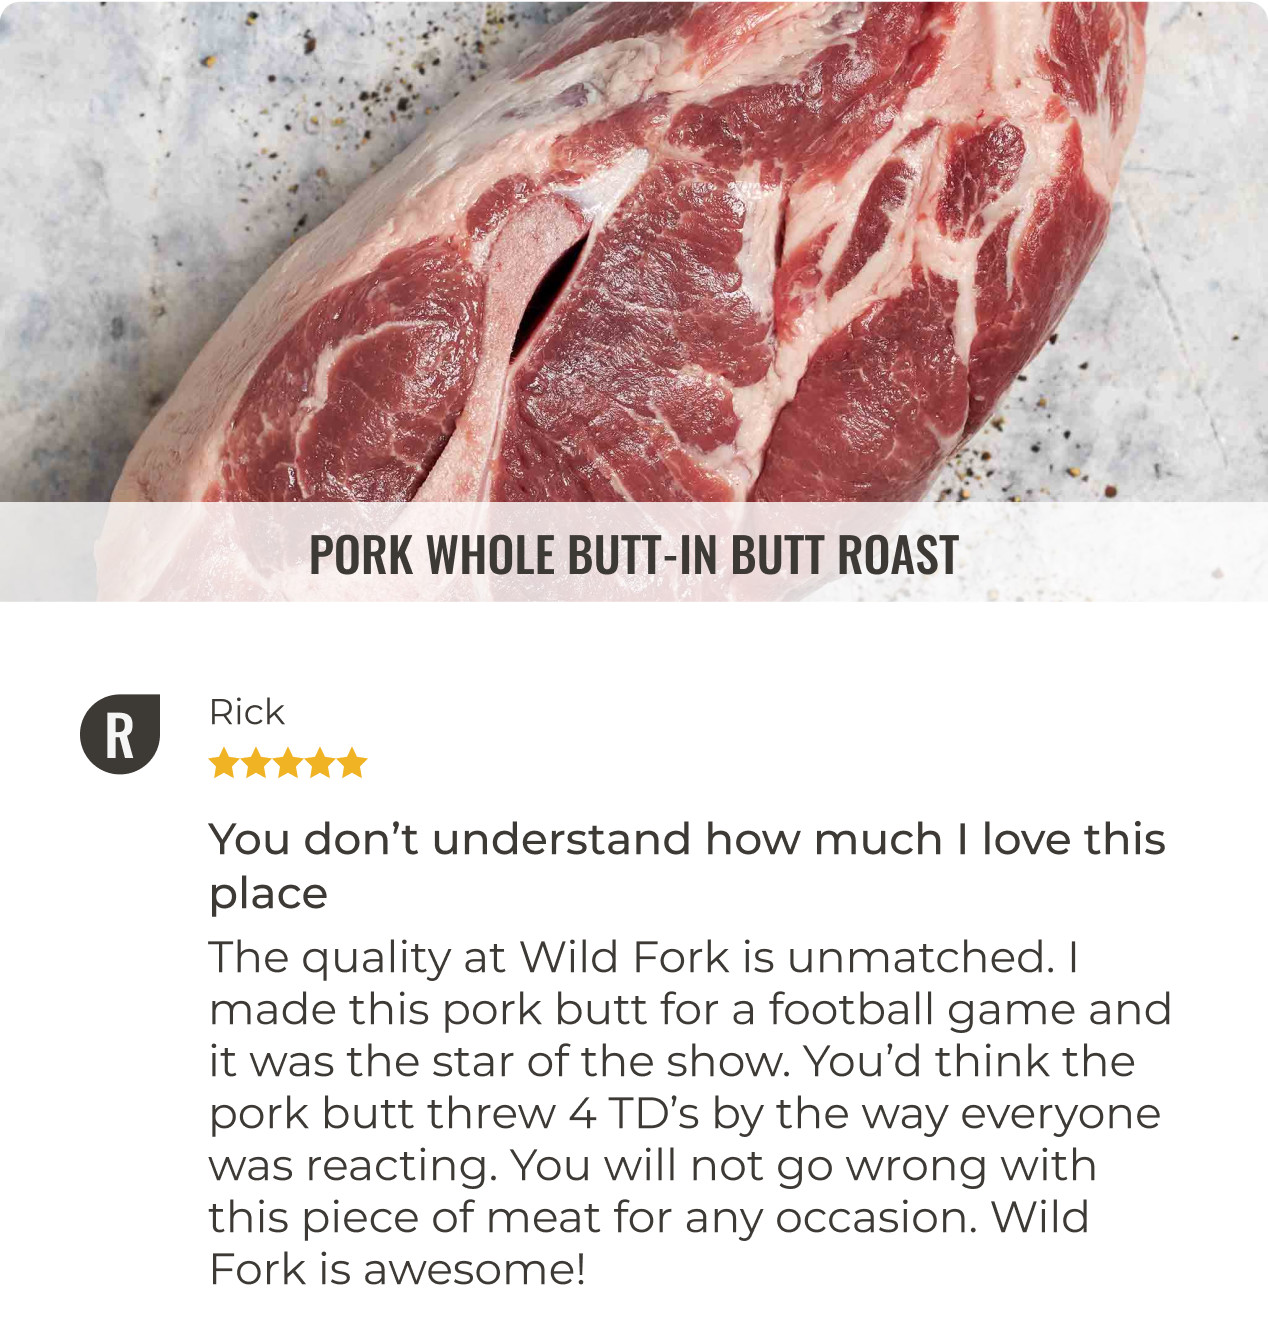 Pork Whole Bone-in Butt Roast Review Card